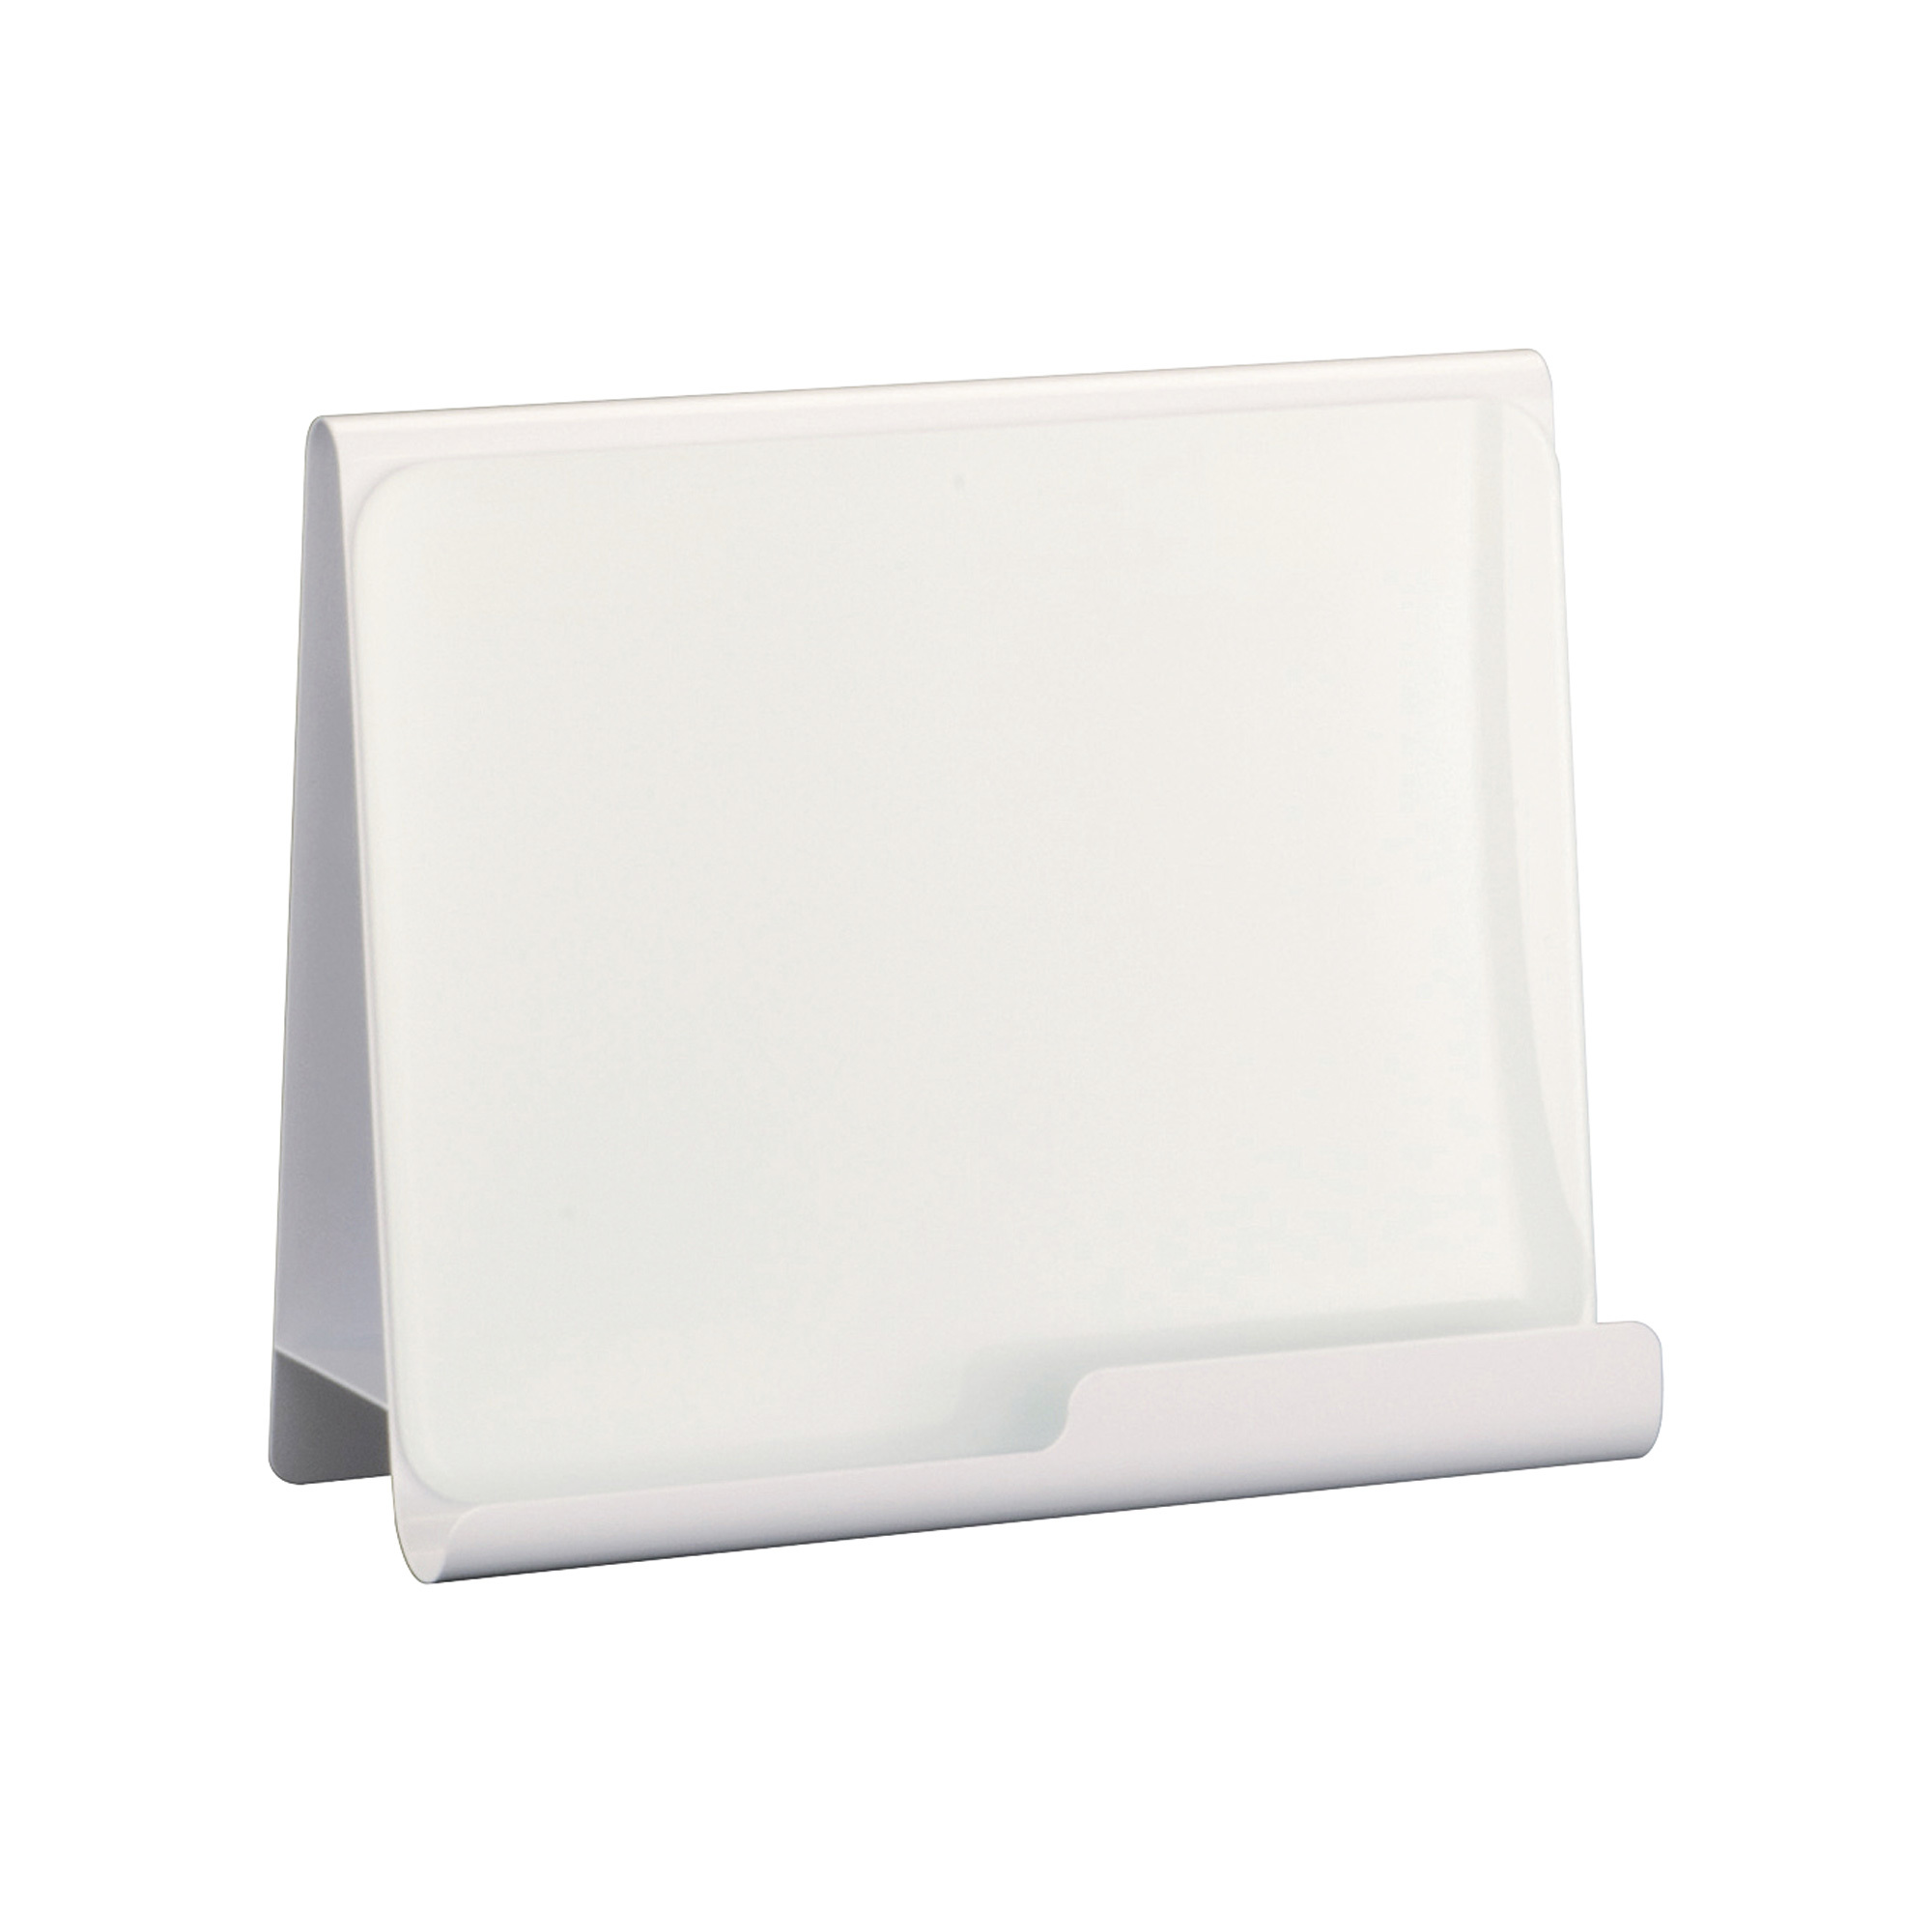 Safco Wave Desk Accessory â Desktop Whiteboard and Magnetic Document Stand â White, Model 3220WH